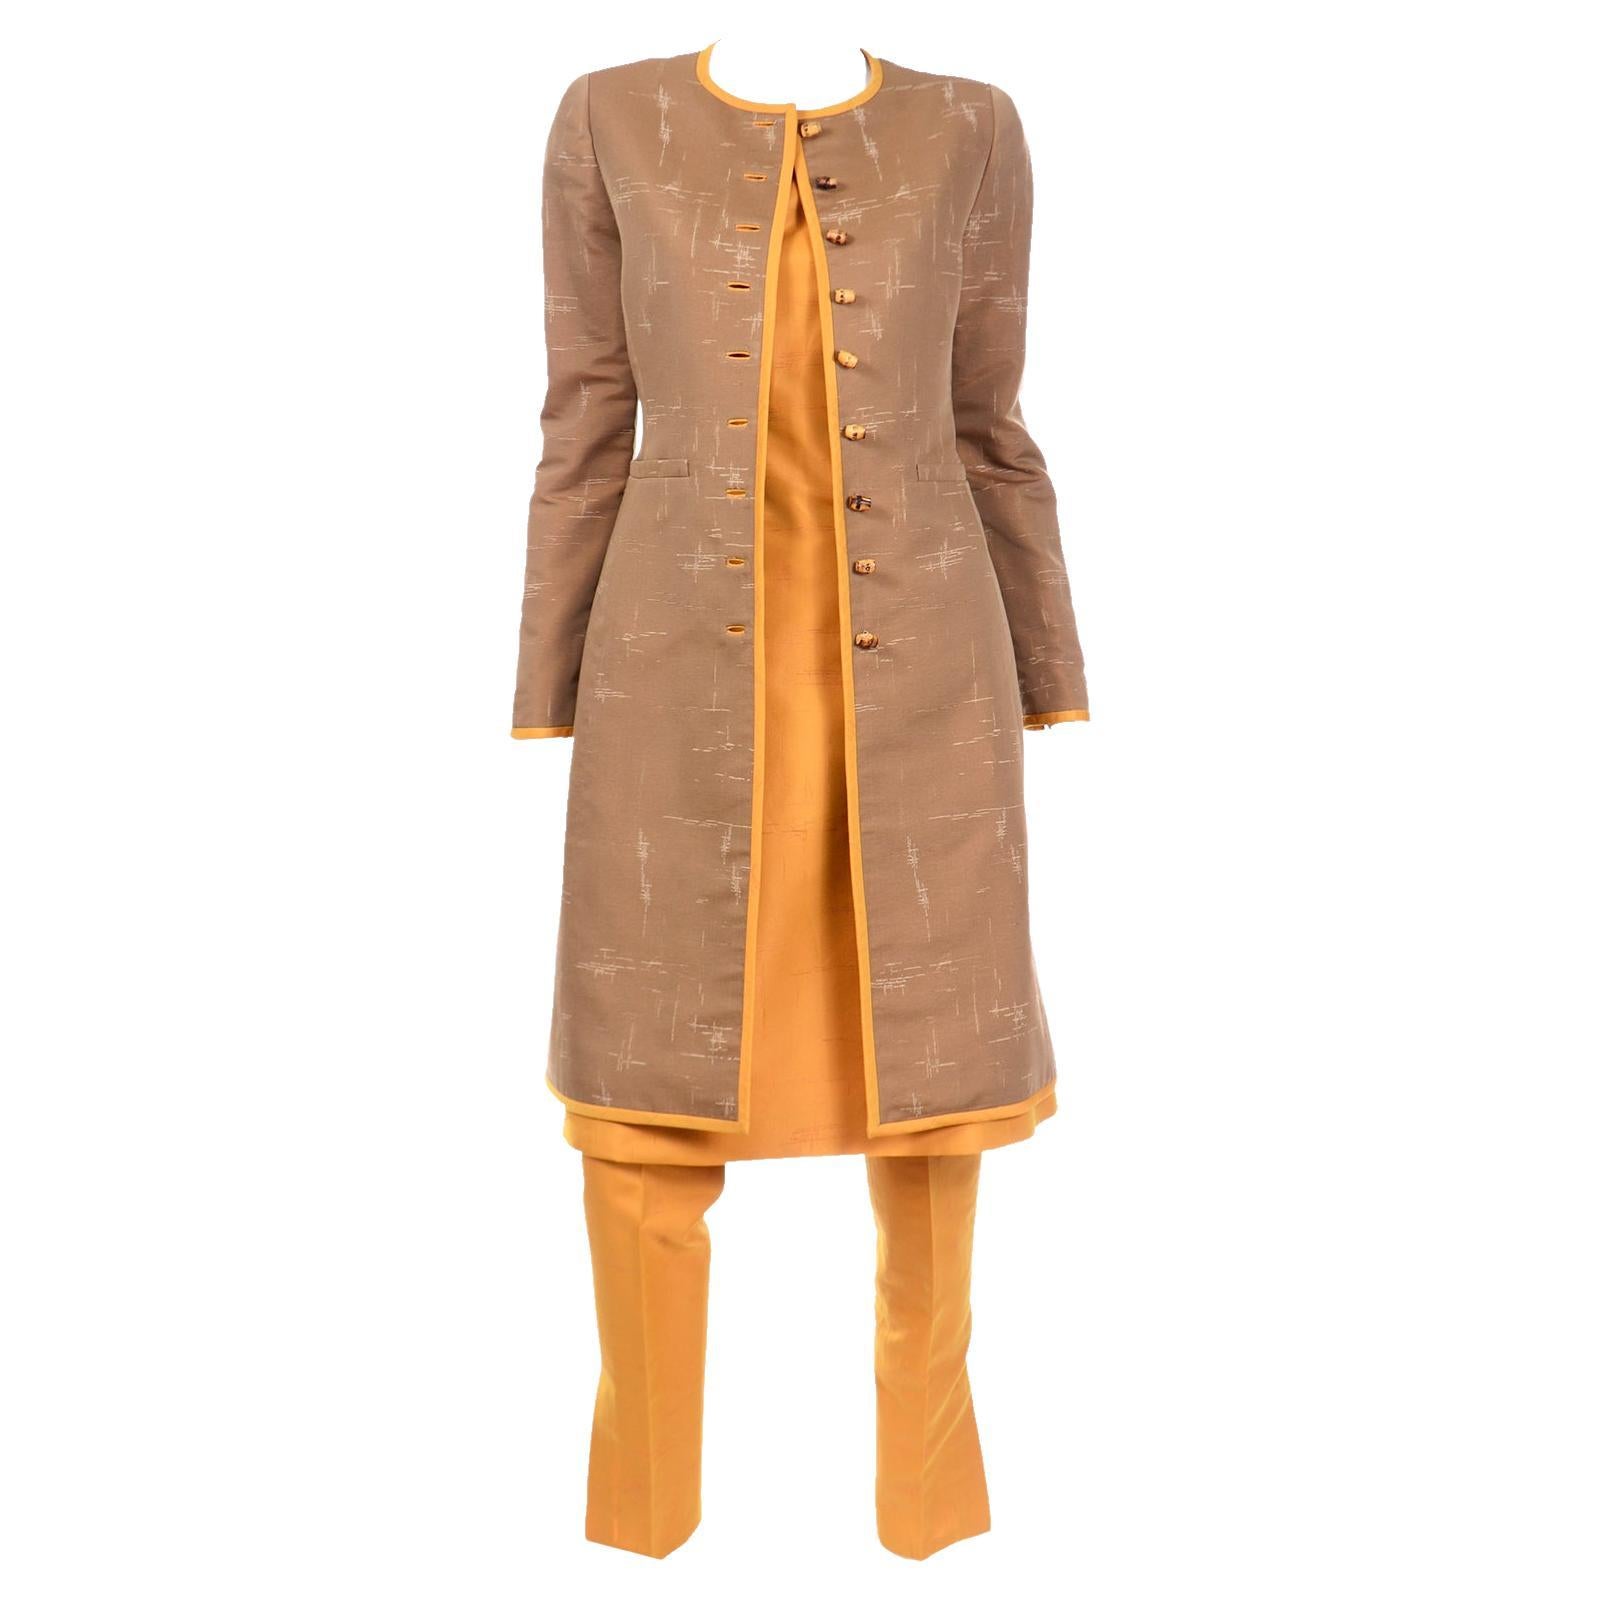 Oscar de la Renta 1990s Vintage 1960s inspired Coat Pants and Dress Outfit For Sale